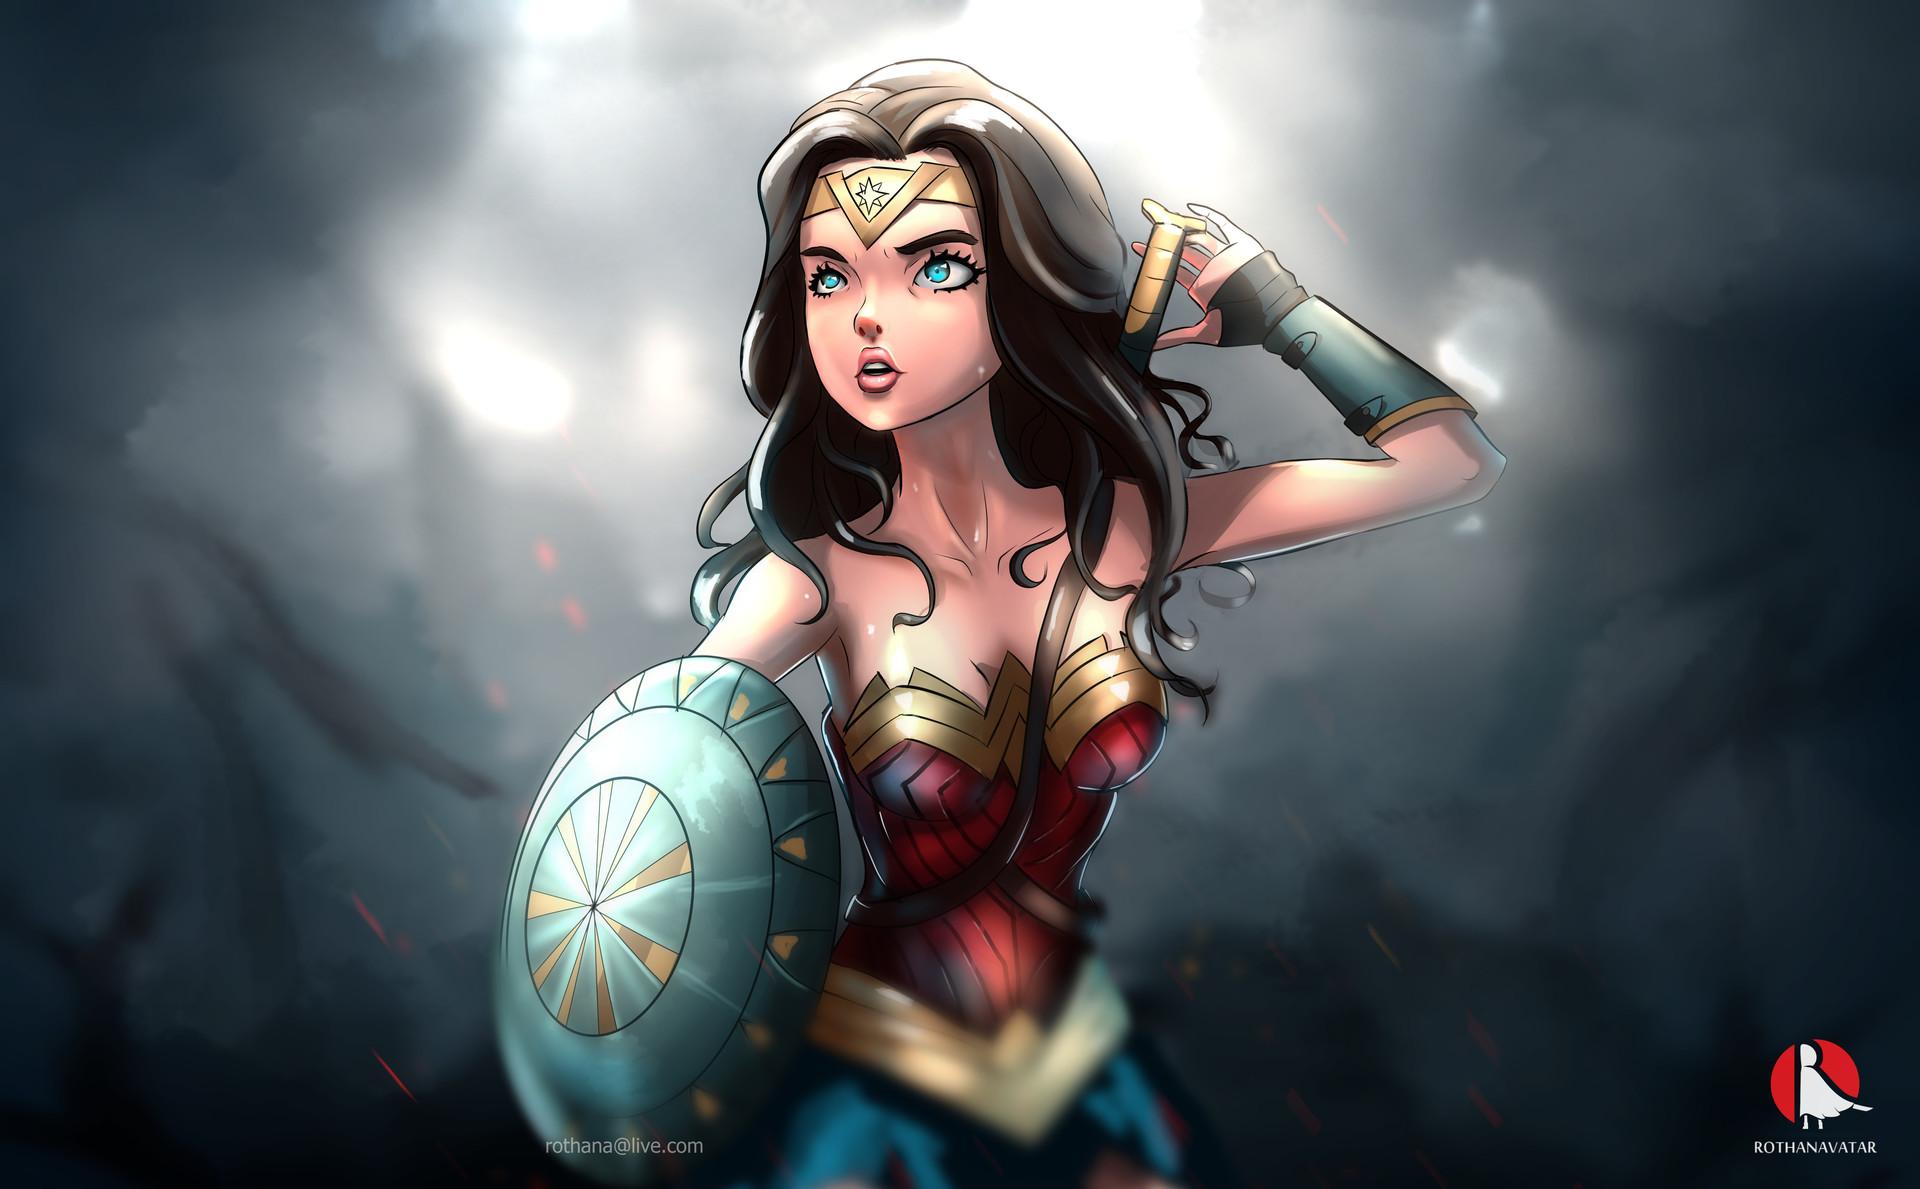 Wonder Woman Cartoon Artwork, HD Superheroes, 4k Wallpaper